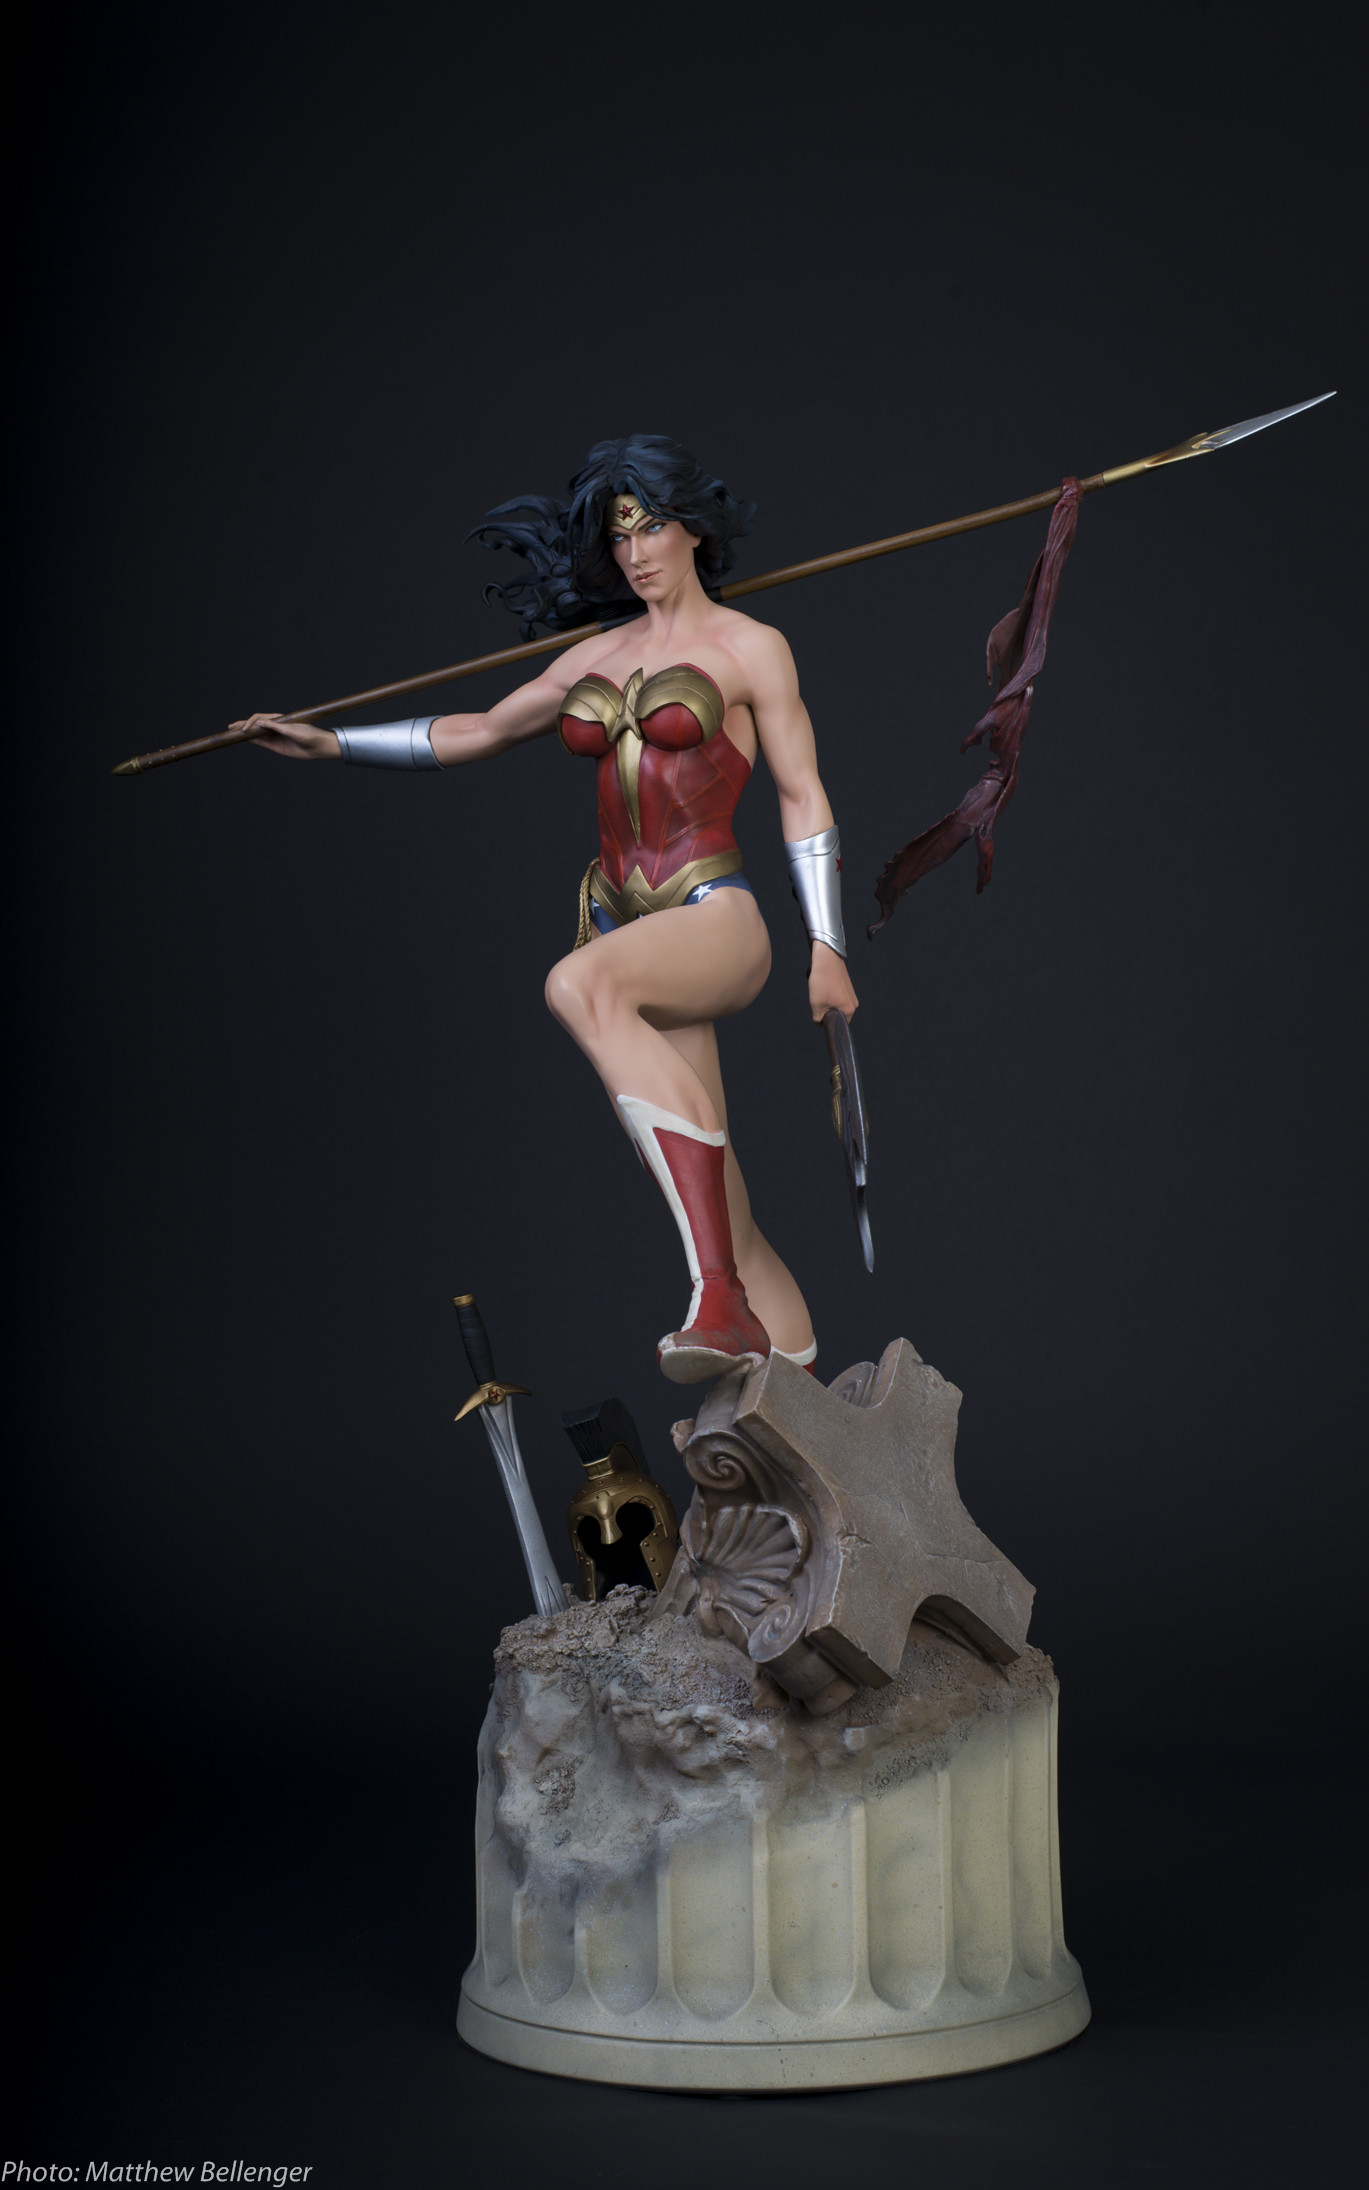 [Sideshow] Wonder Woman - Premium Format - LANÇADA!!! - Página 3 Attachment